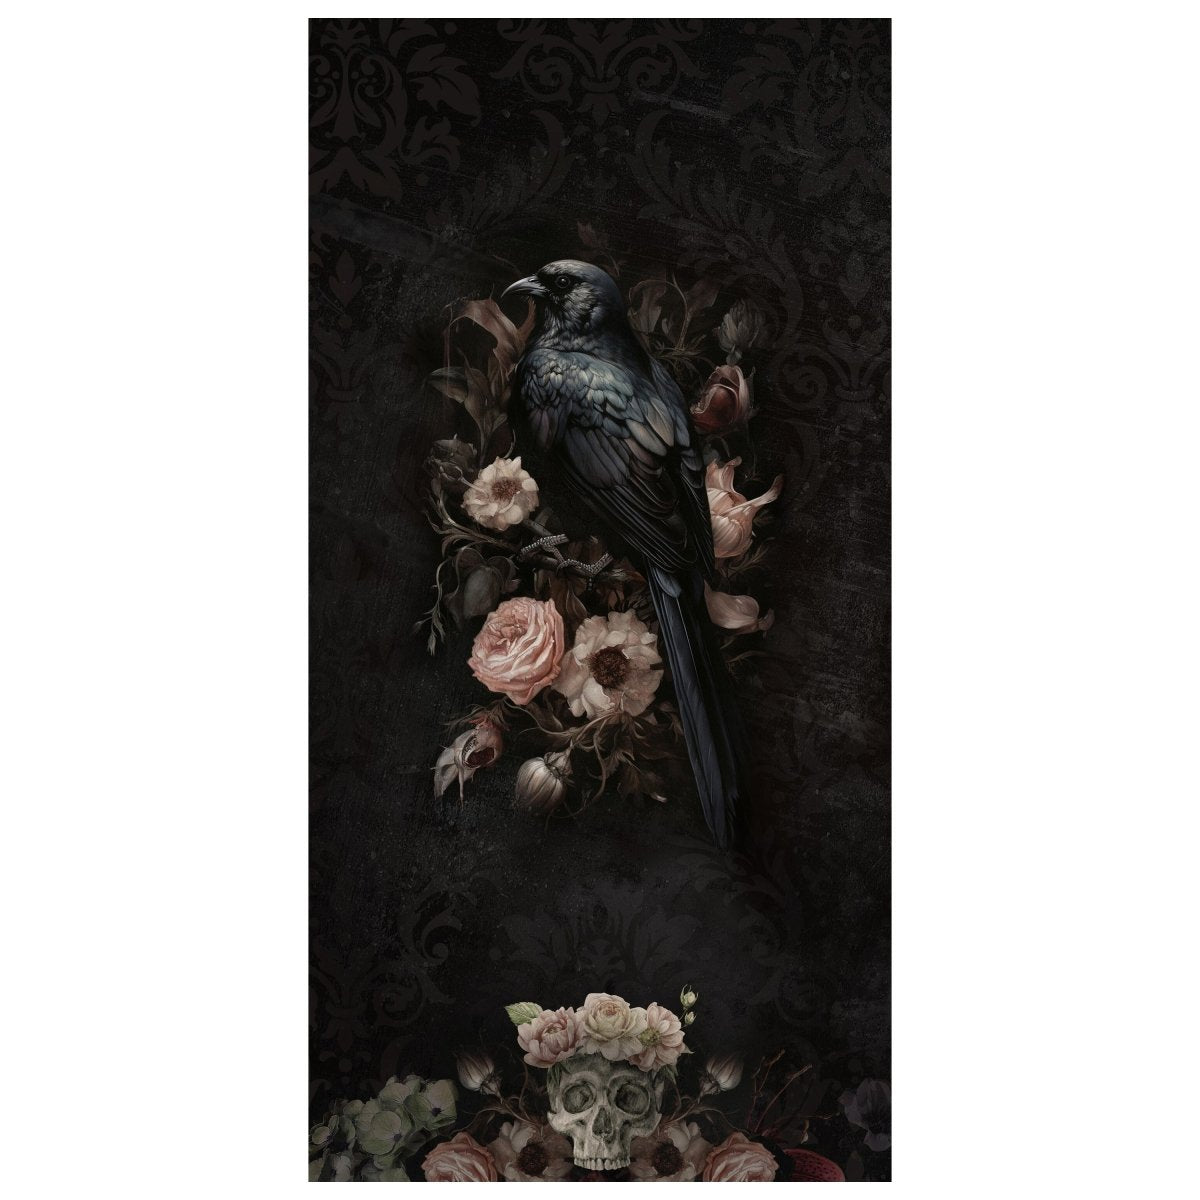 Türtapete Rabe, Gothic, Totenkopf, Blüten M1451 - Bild 2